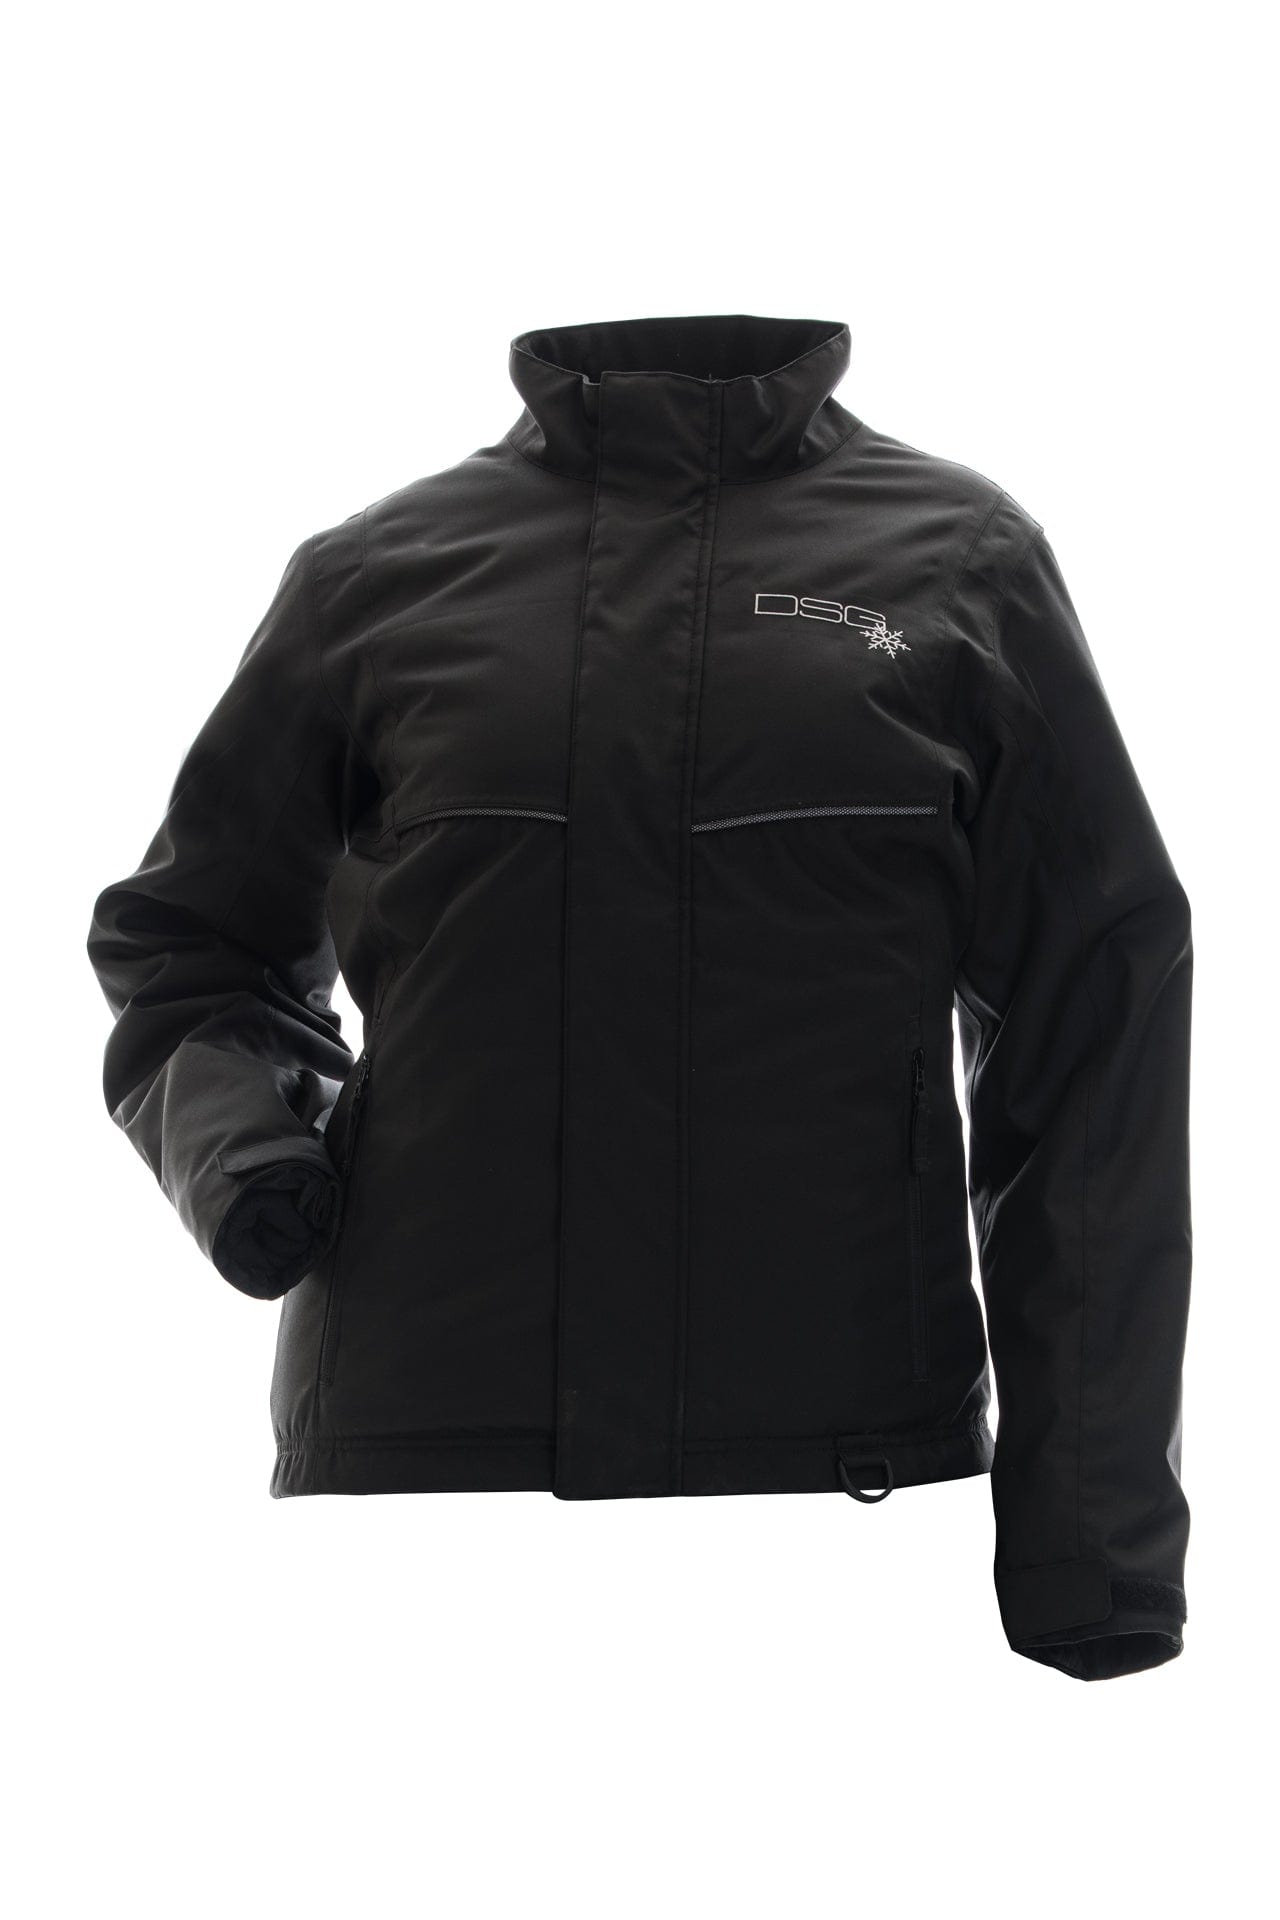 Western Powersports Jacket Black / 1XL Trail Jacket By Dsg 45396